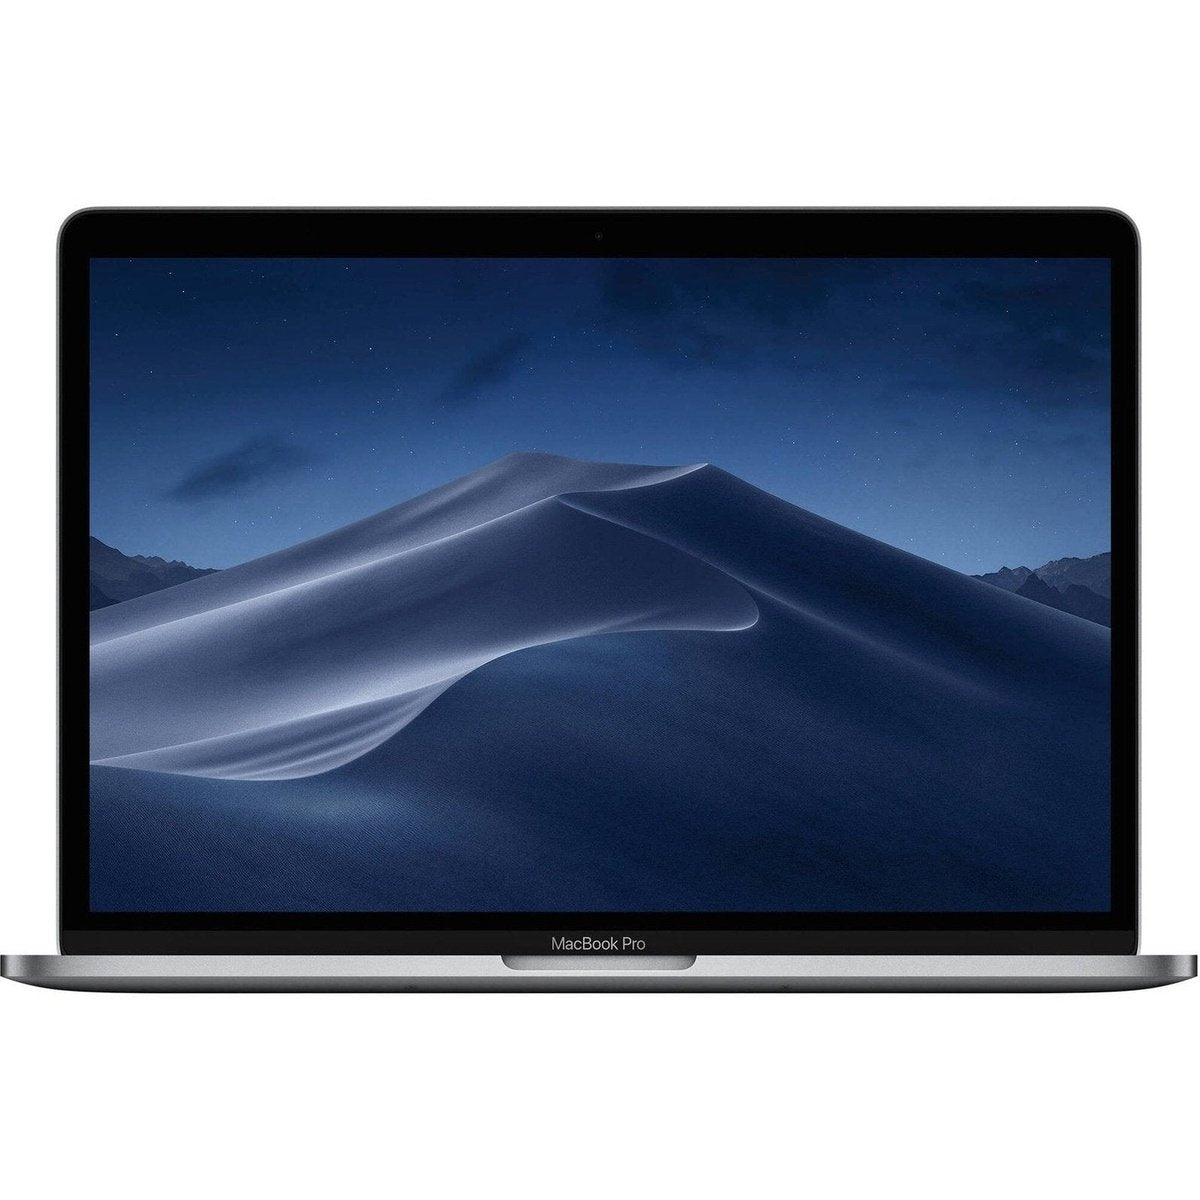 MacBook Pro 13" 2019 (2.8 GHz - Core i7 - 16GB RAM - 512GB SSD - Intel Iris Plus) Space Gray